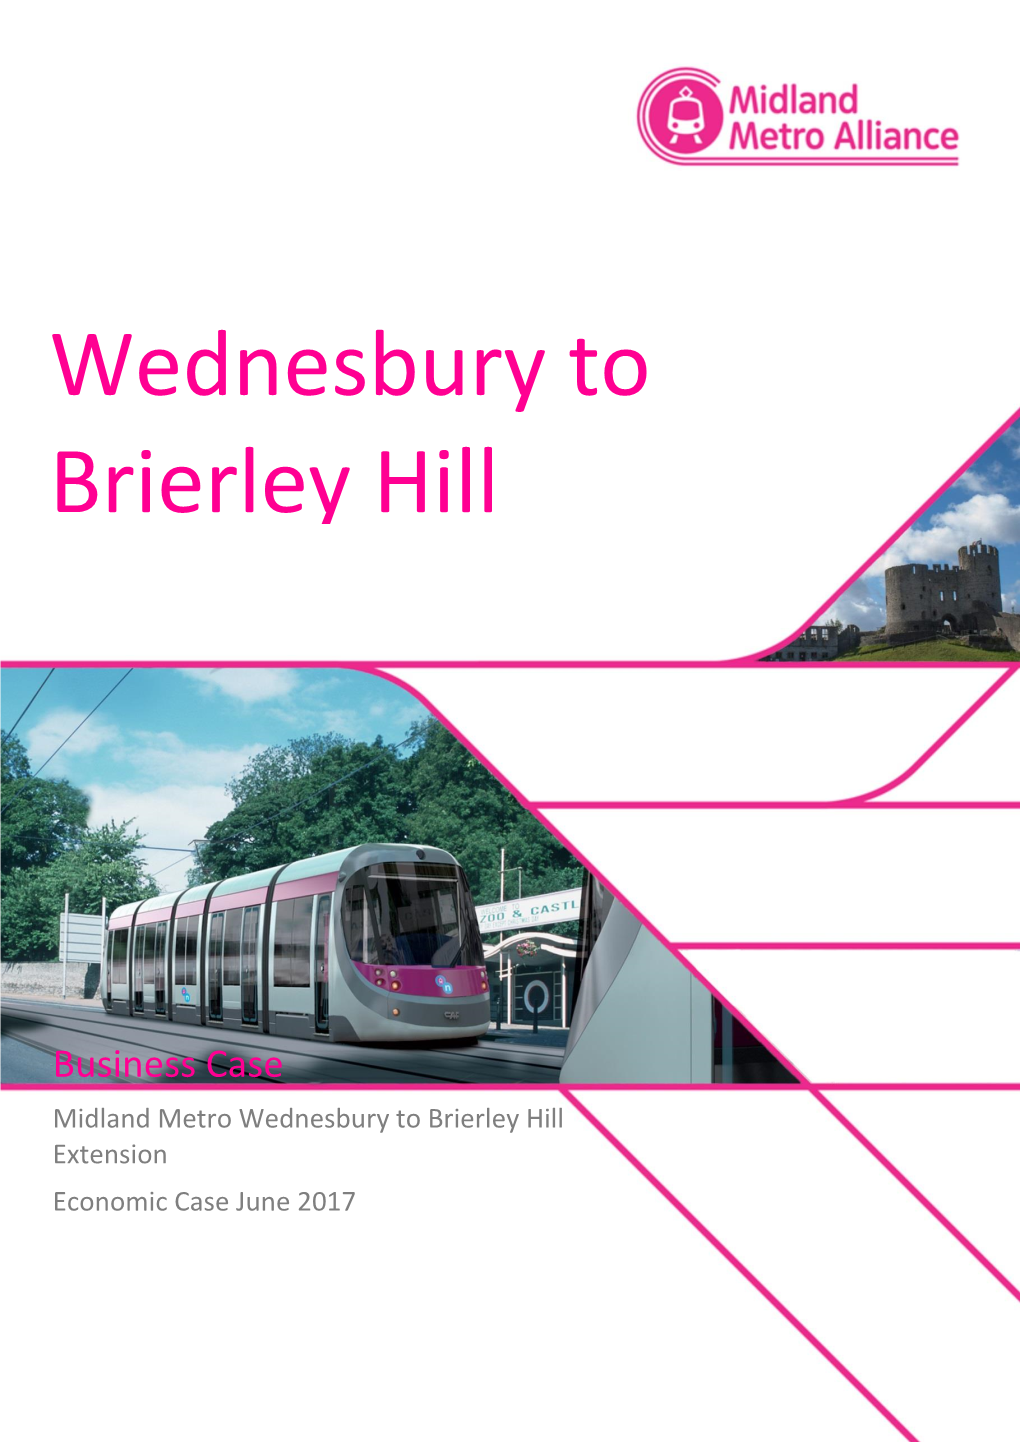 Midland Metro Wednesbury to Brierley Hill Extension